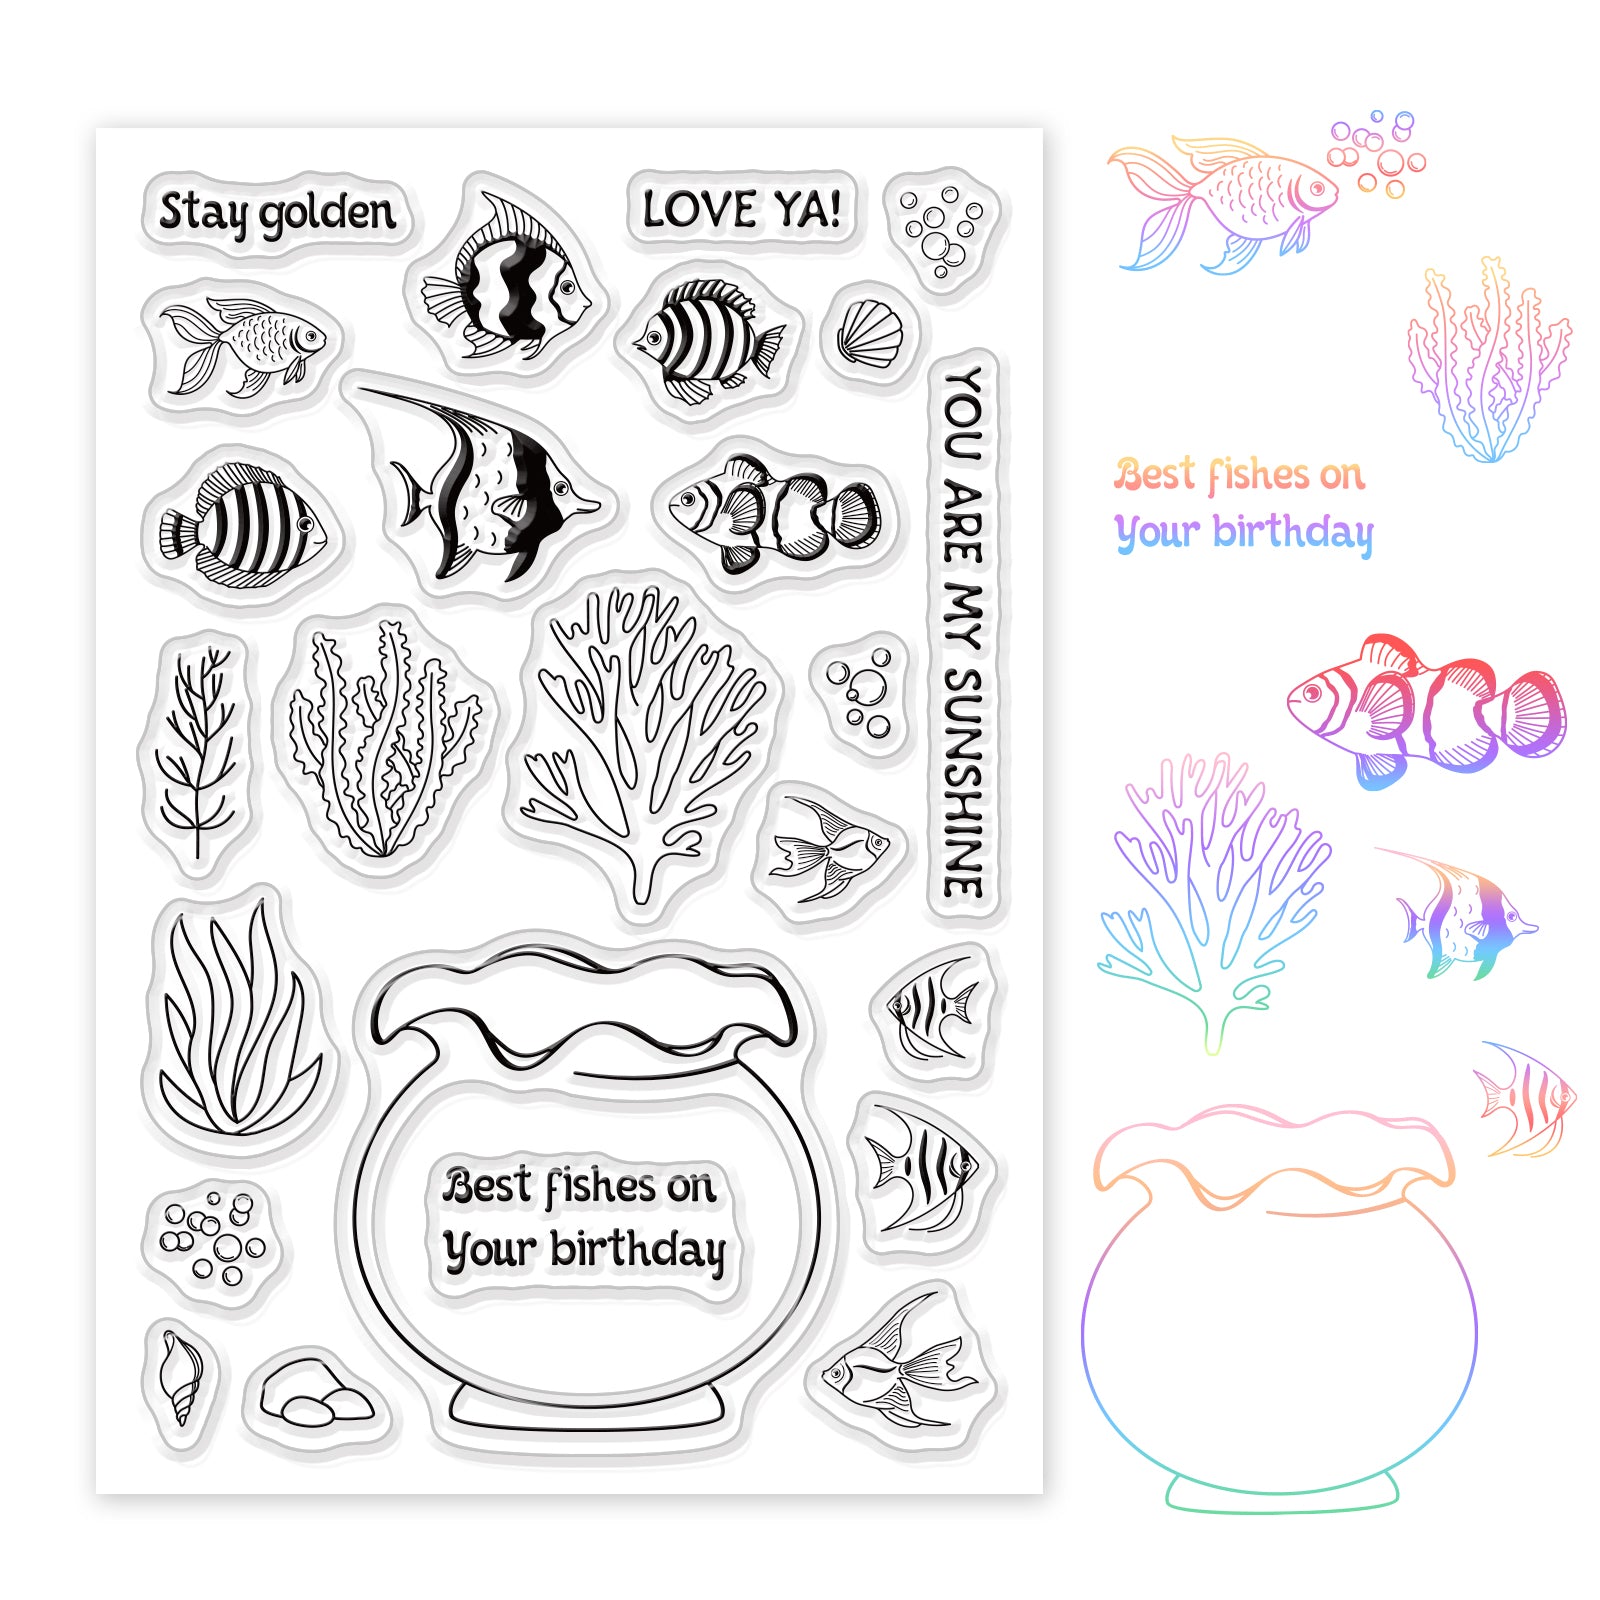 GLOBLELAND Goldfish Silicone Stamp Seal for Card Making Decoration and DIY Scrapbooking